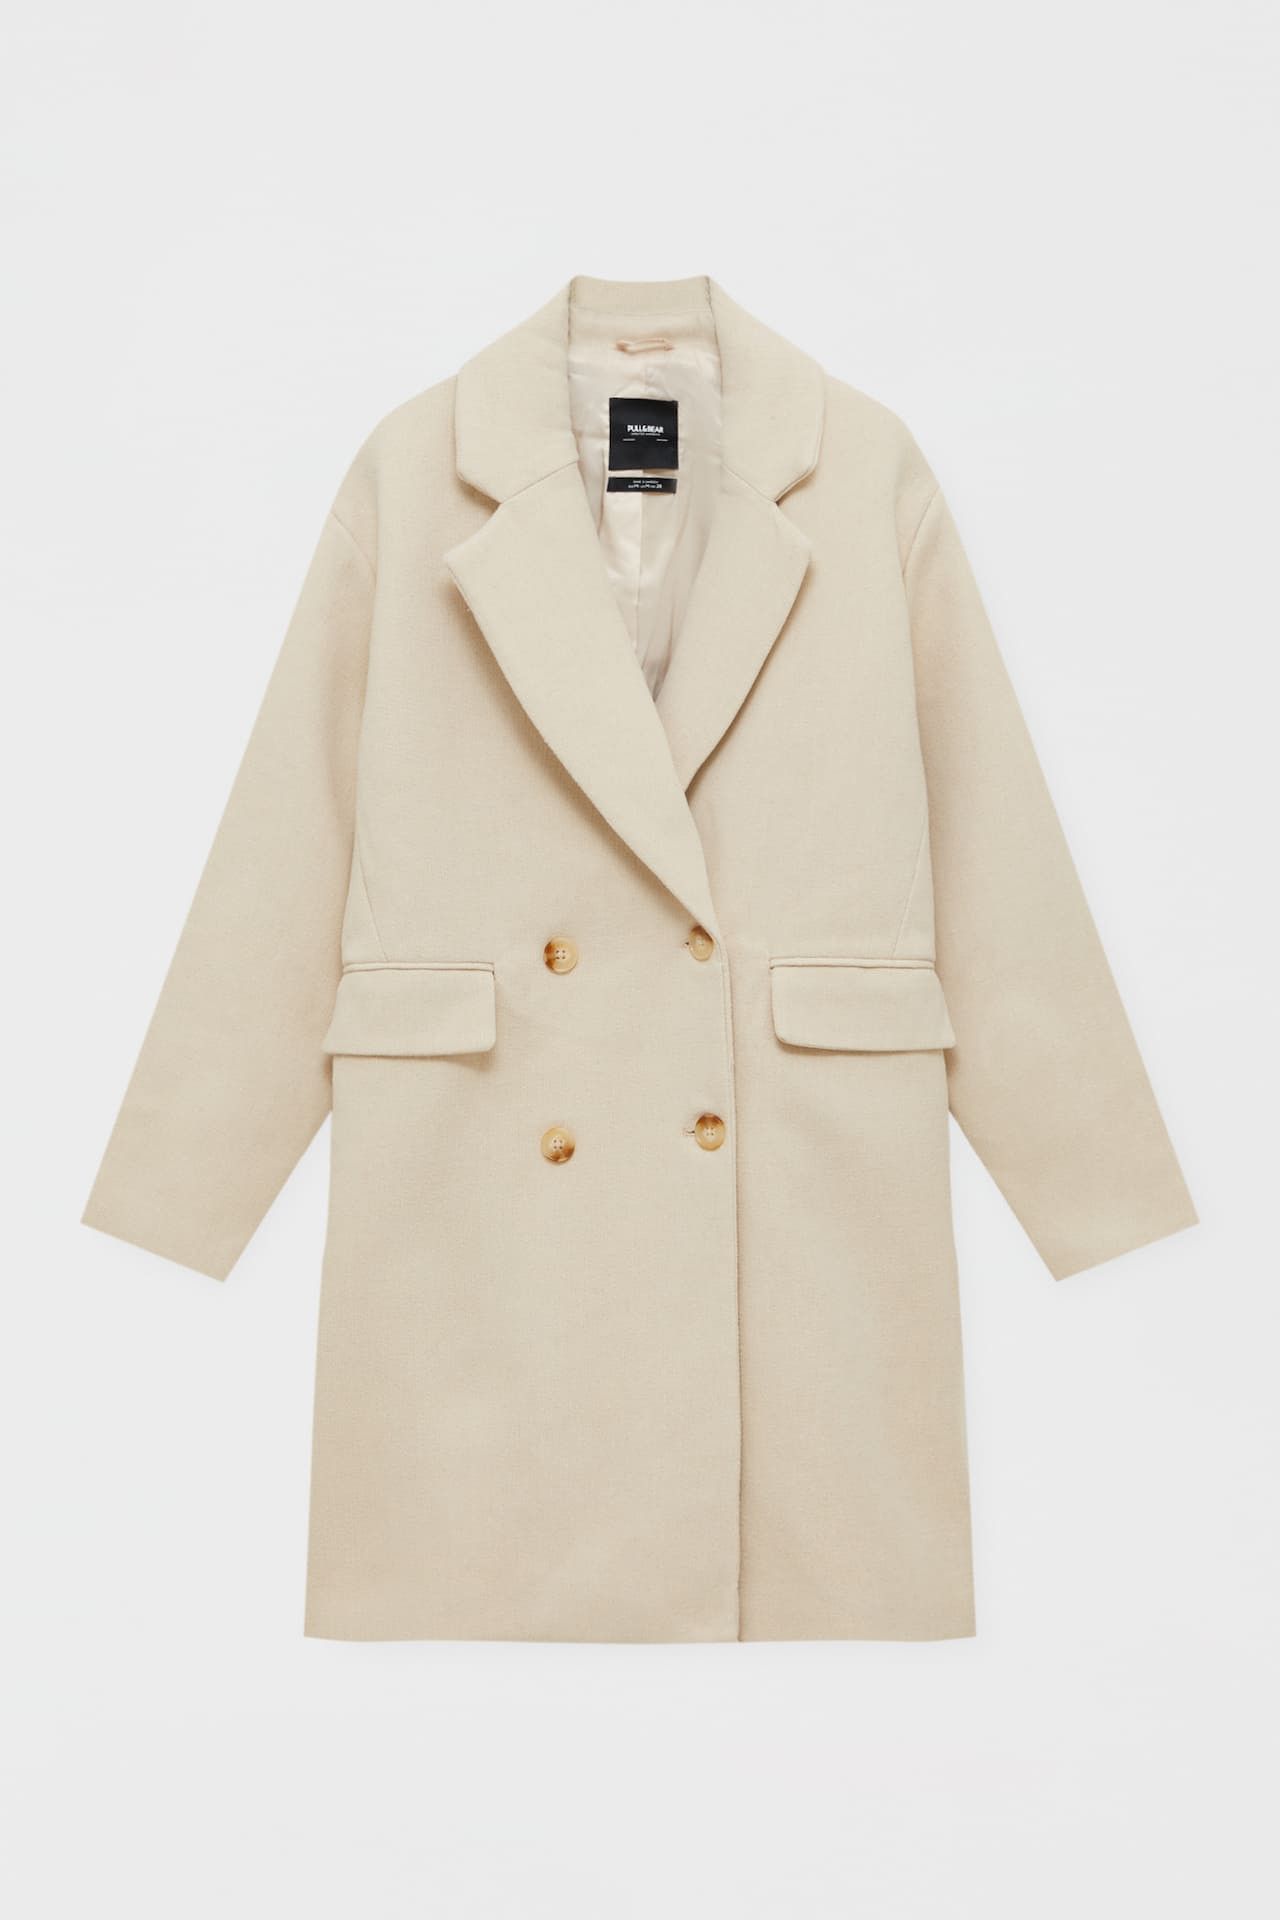 Oversize cloth coat | White Coat Coats | Winter Coat | Winter Outfit Ideas | PULL and BEAR UK